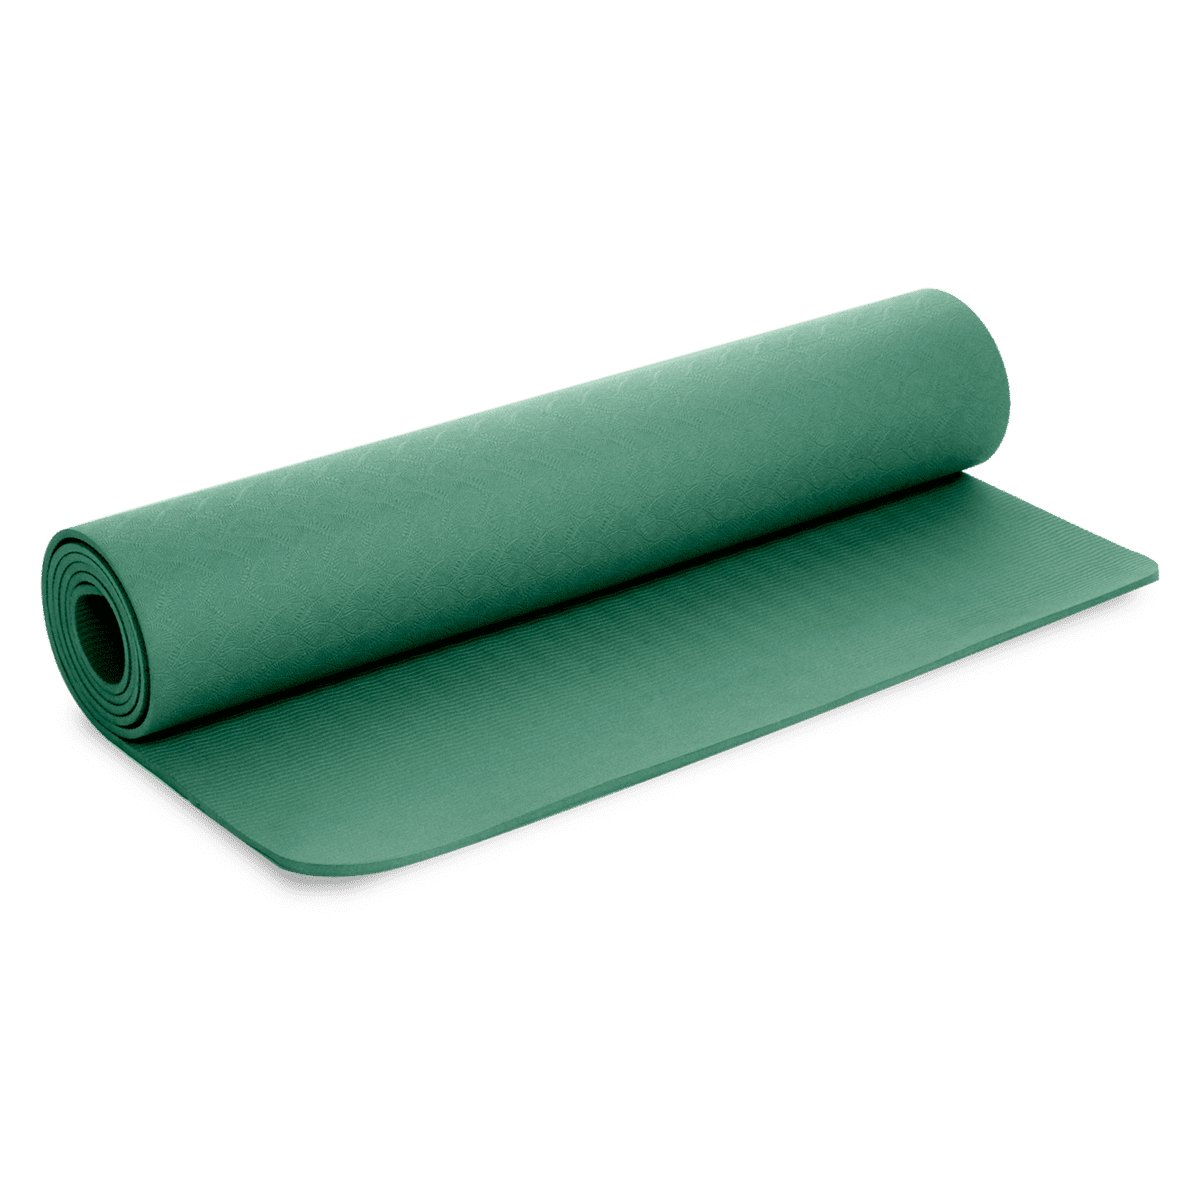 YUREN Yoga Mat, TPE Material, For 2 People, Wide, Nepal